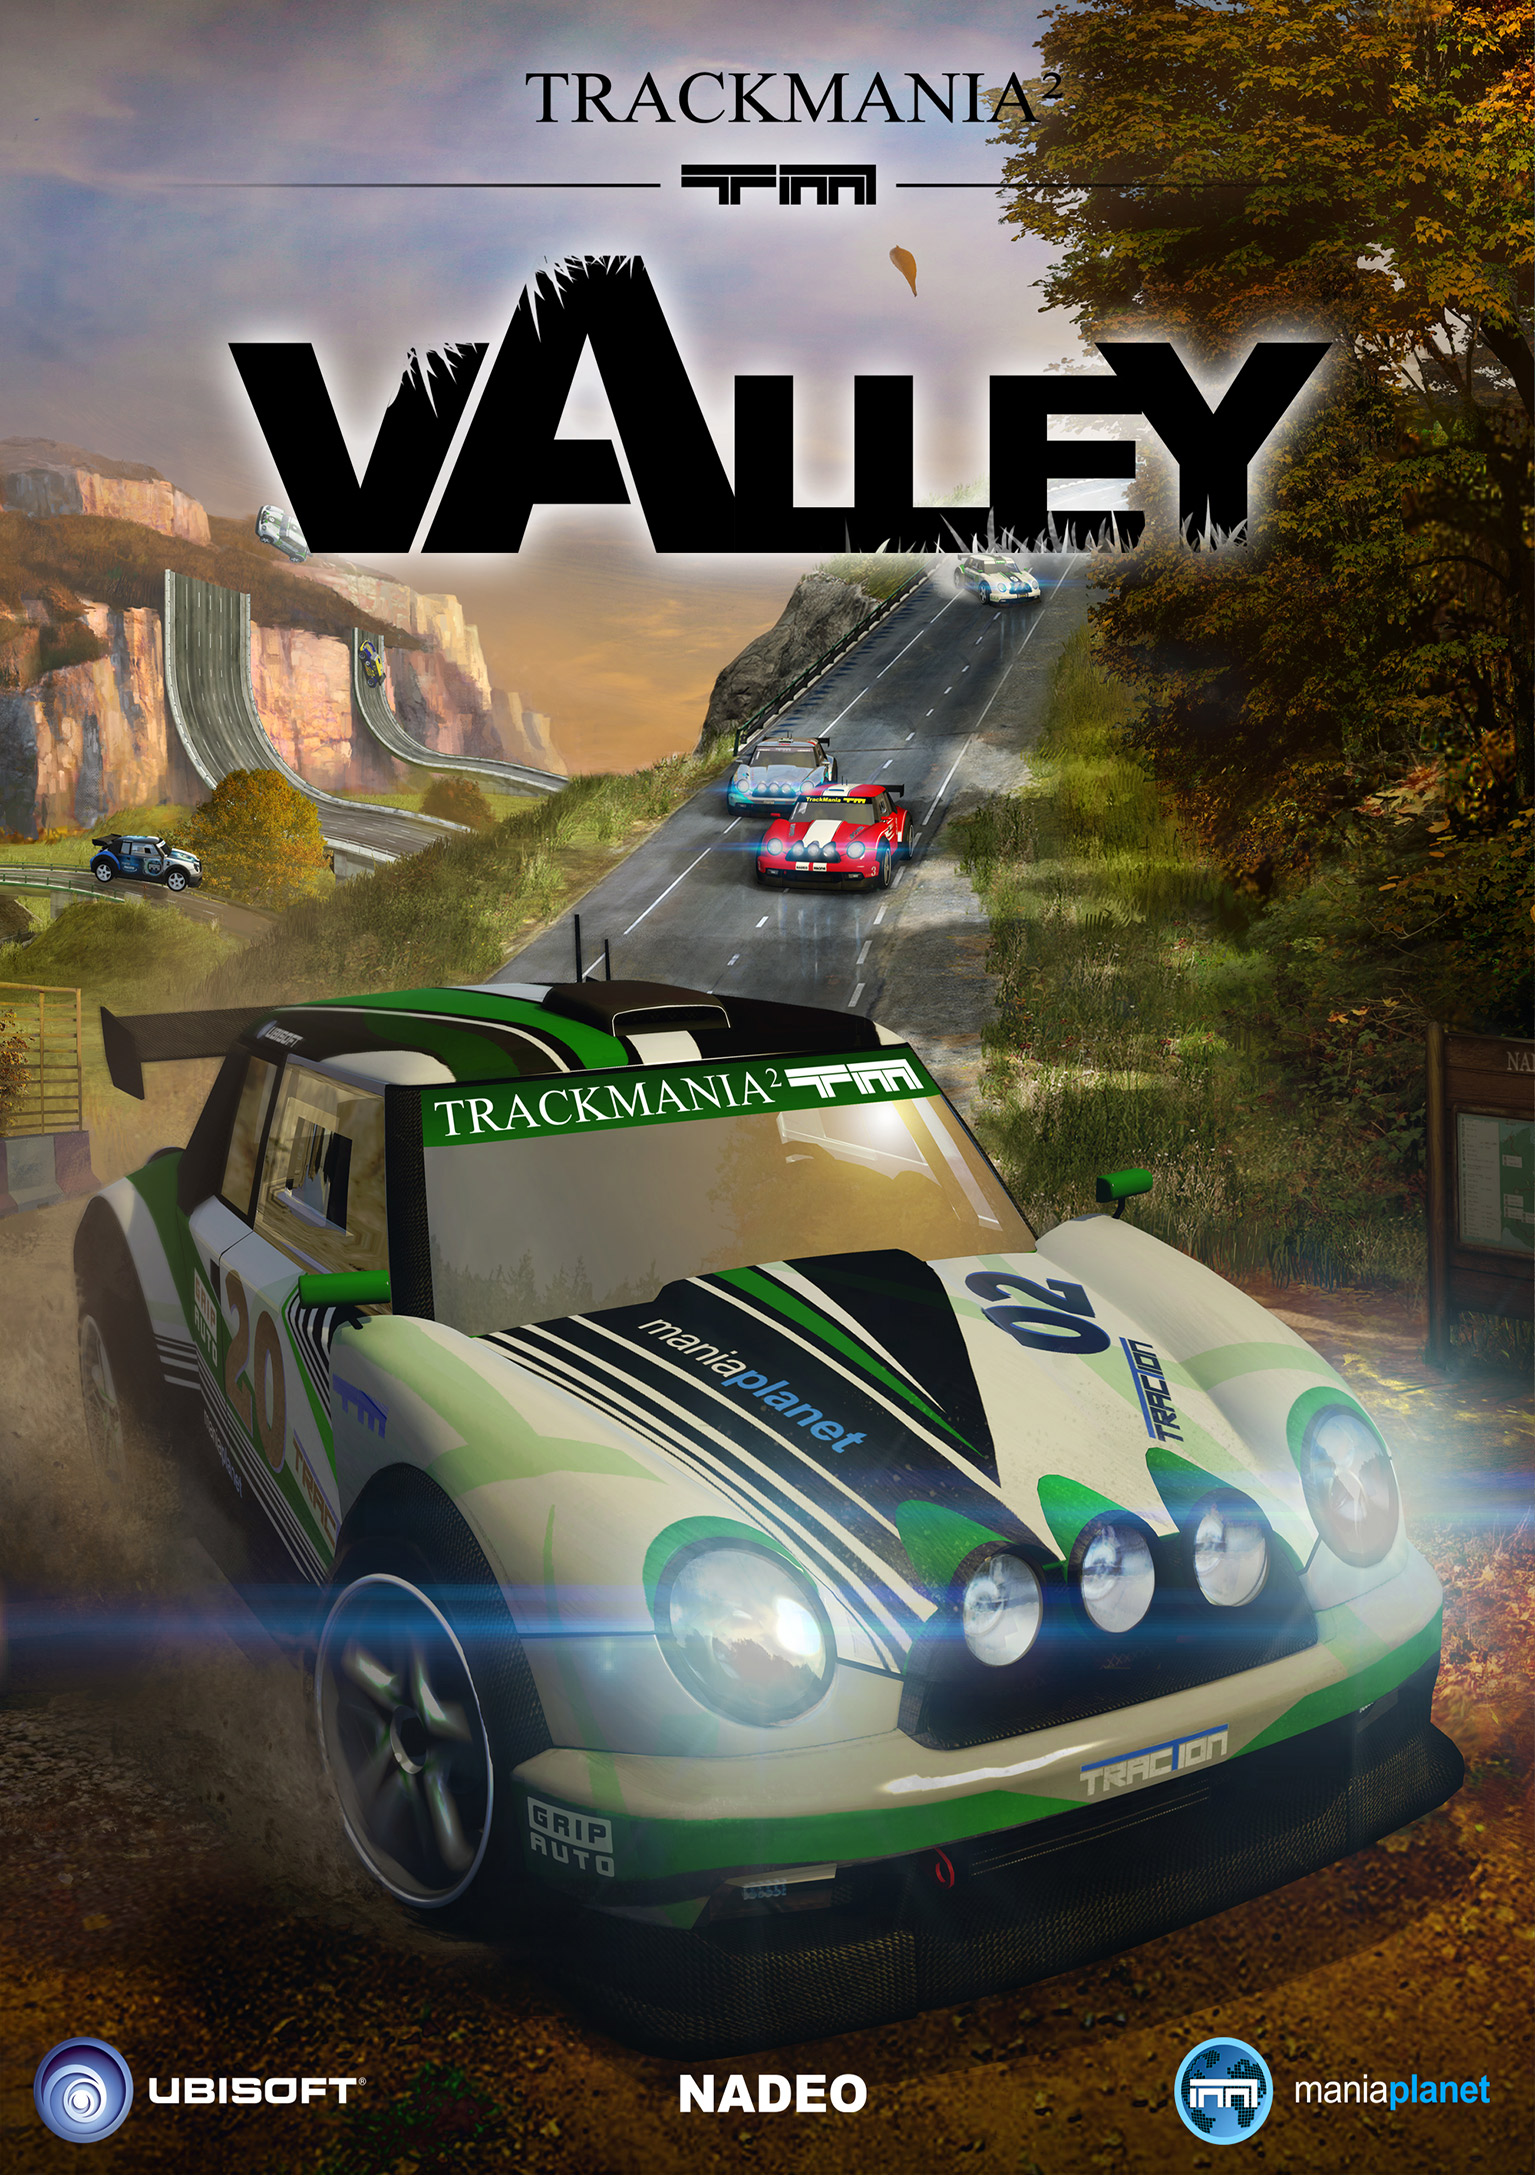 TrackMania 2: Valley - predn DVD obal